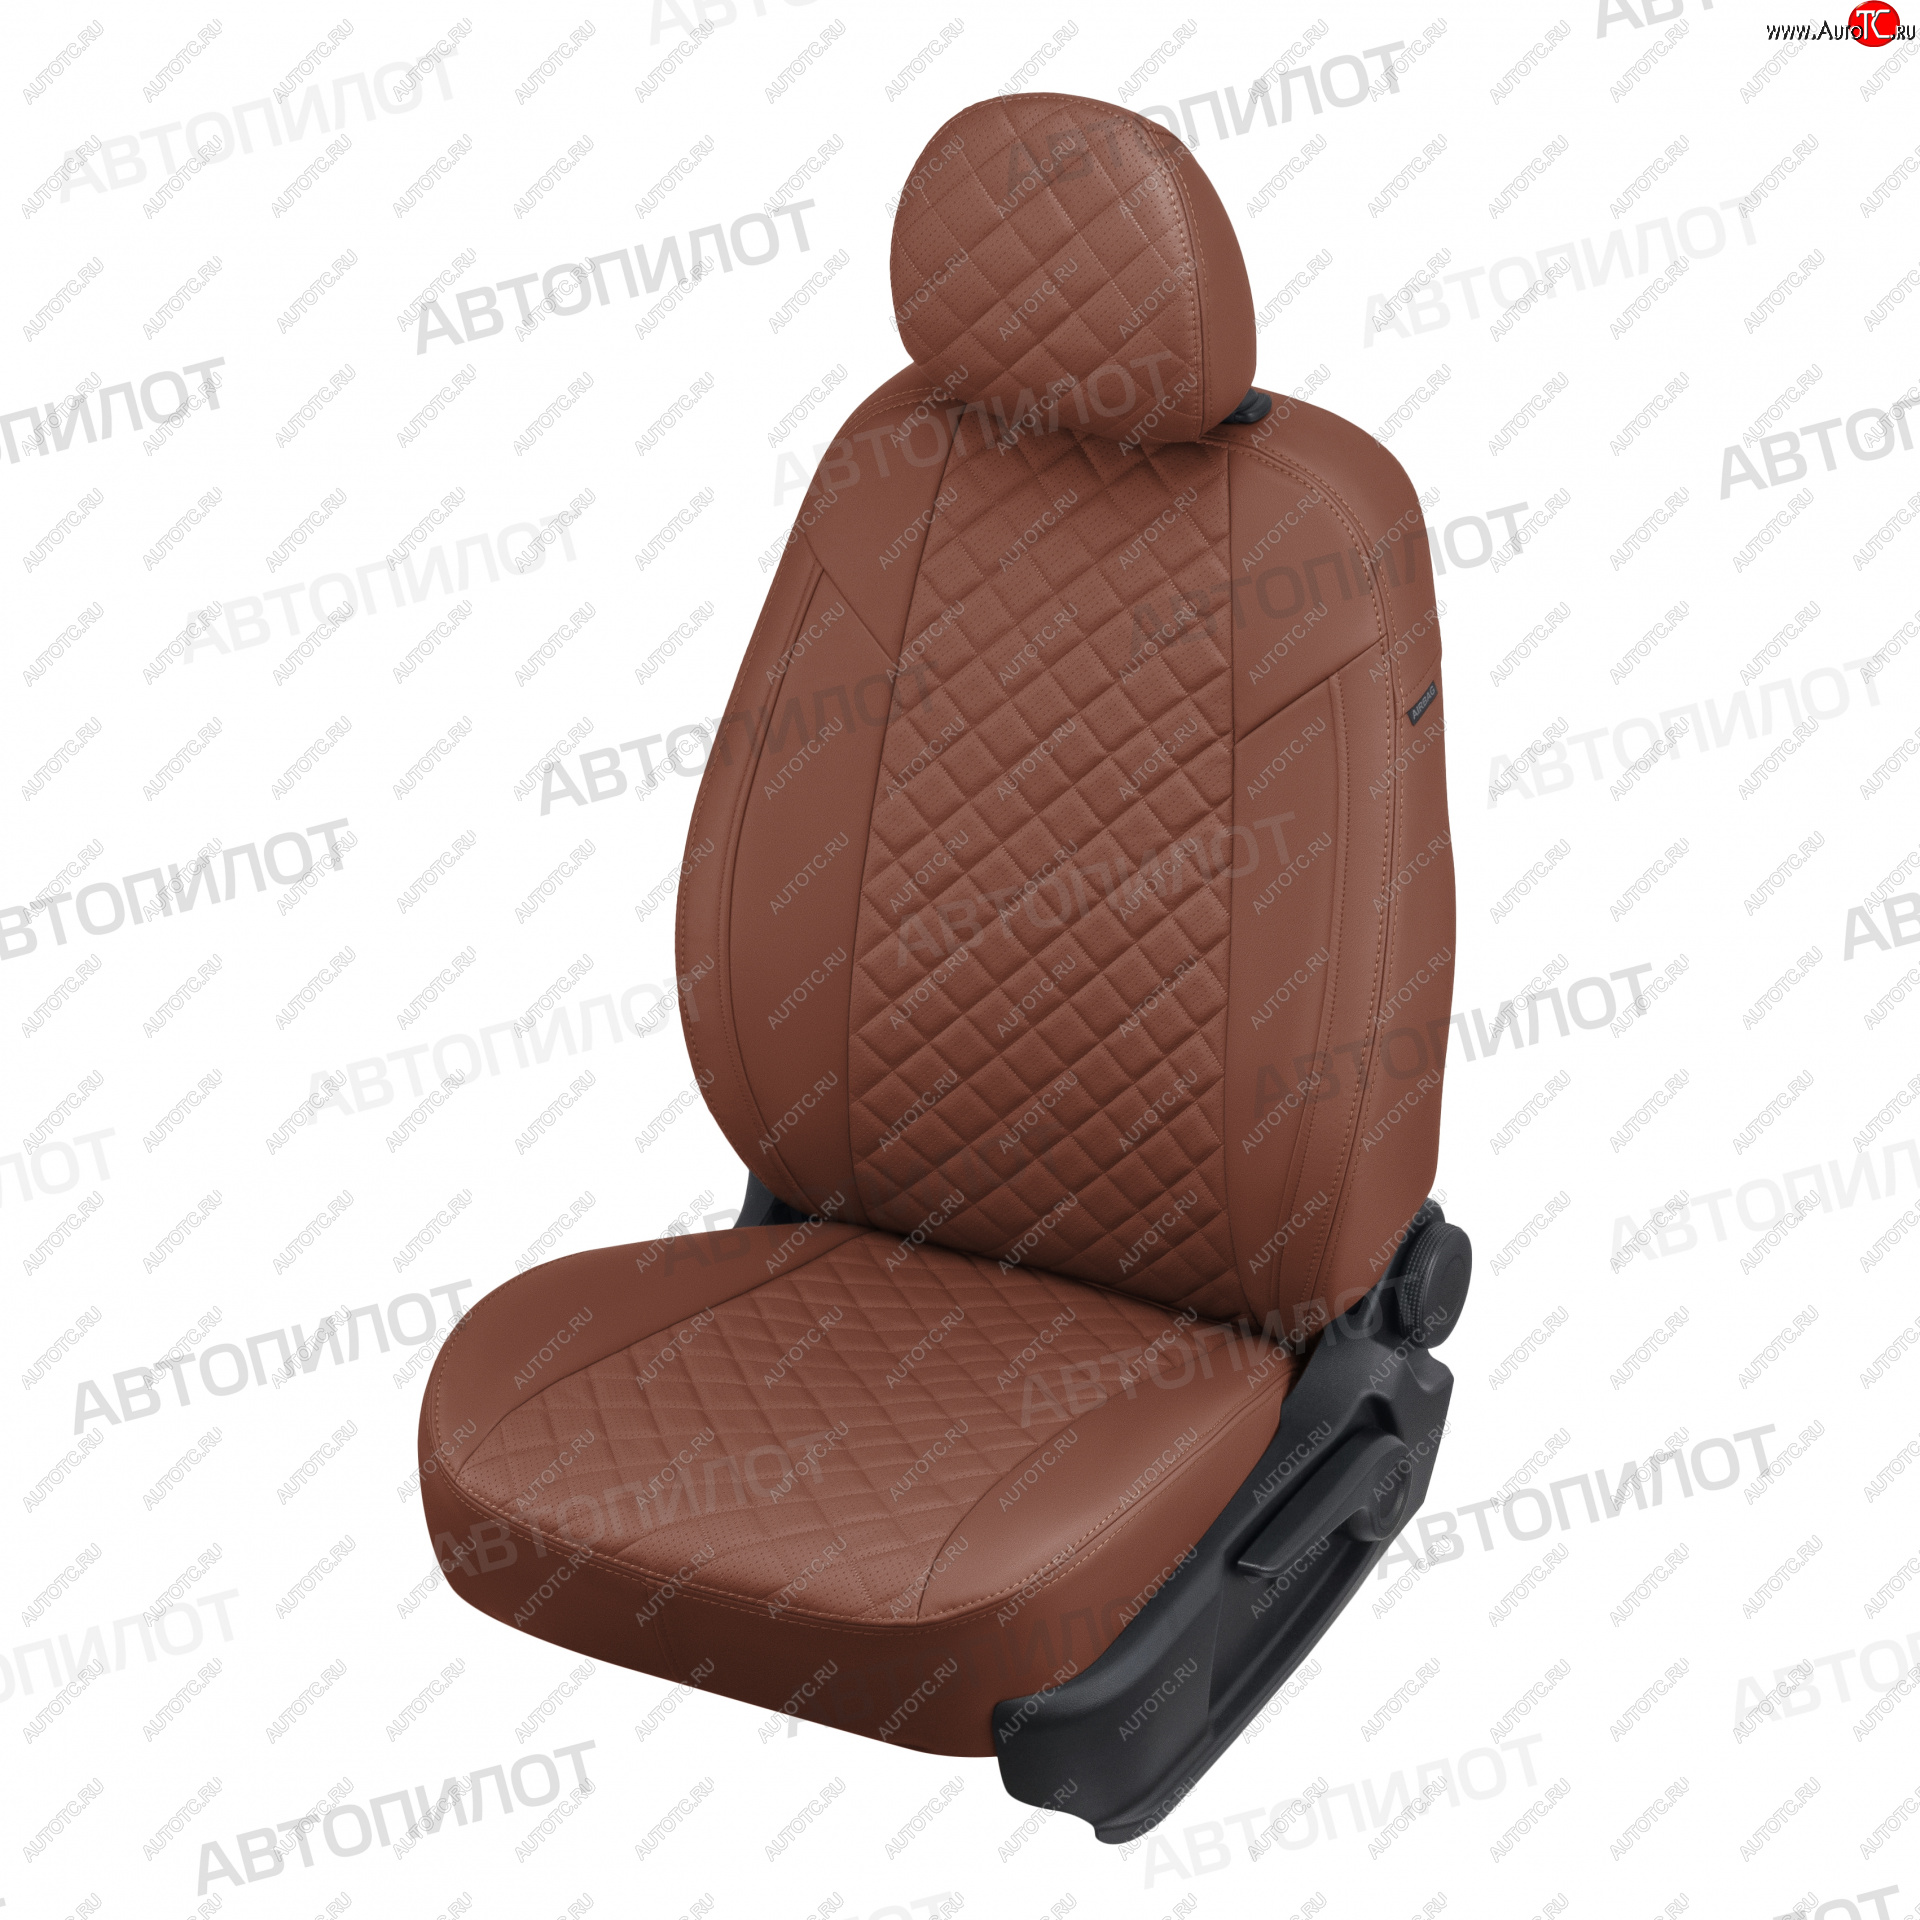 13 999 р. Чехлы сидений (экокожа) Автопилот Ромб  Chery Kimo  A1 (2008-2014) (коричневый)